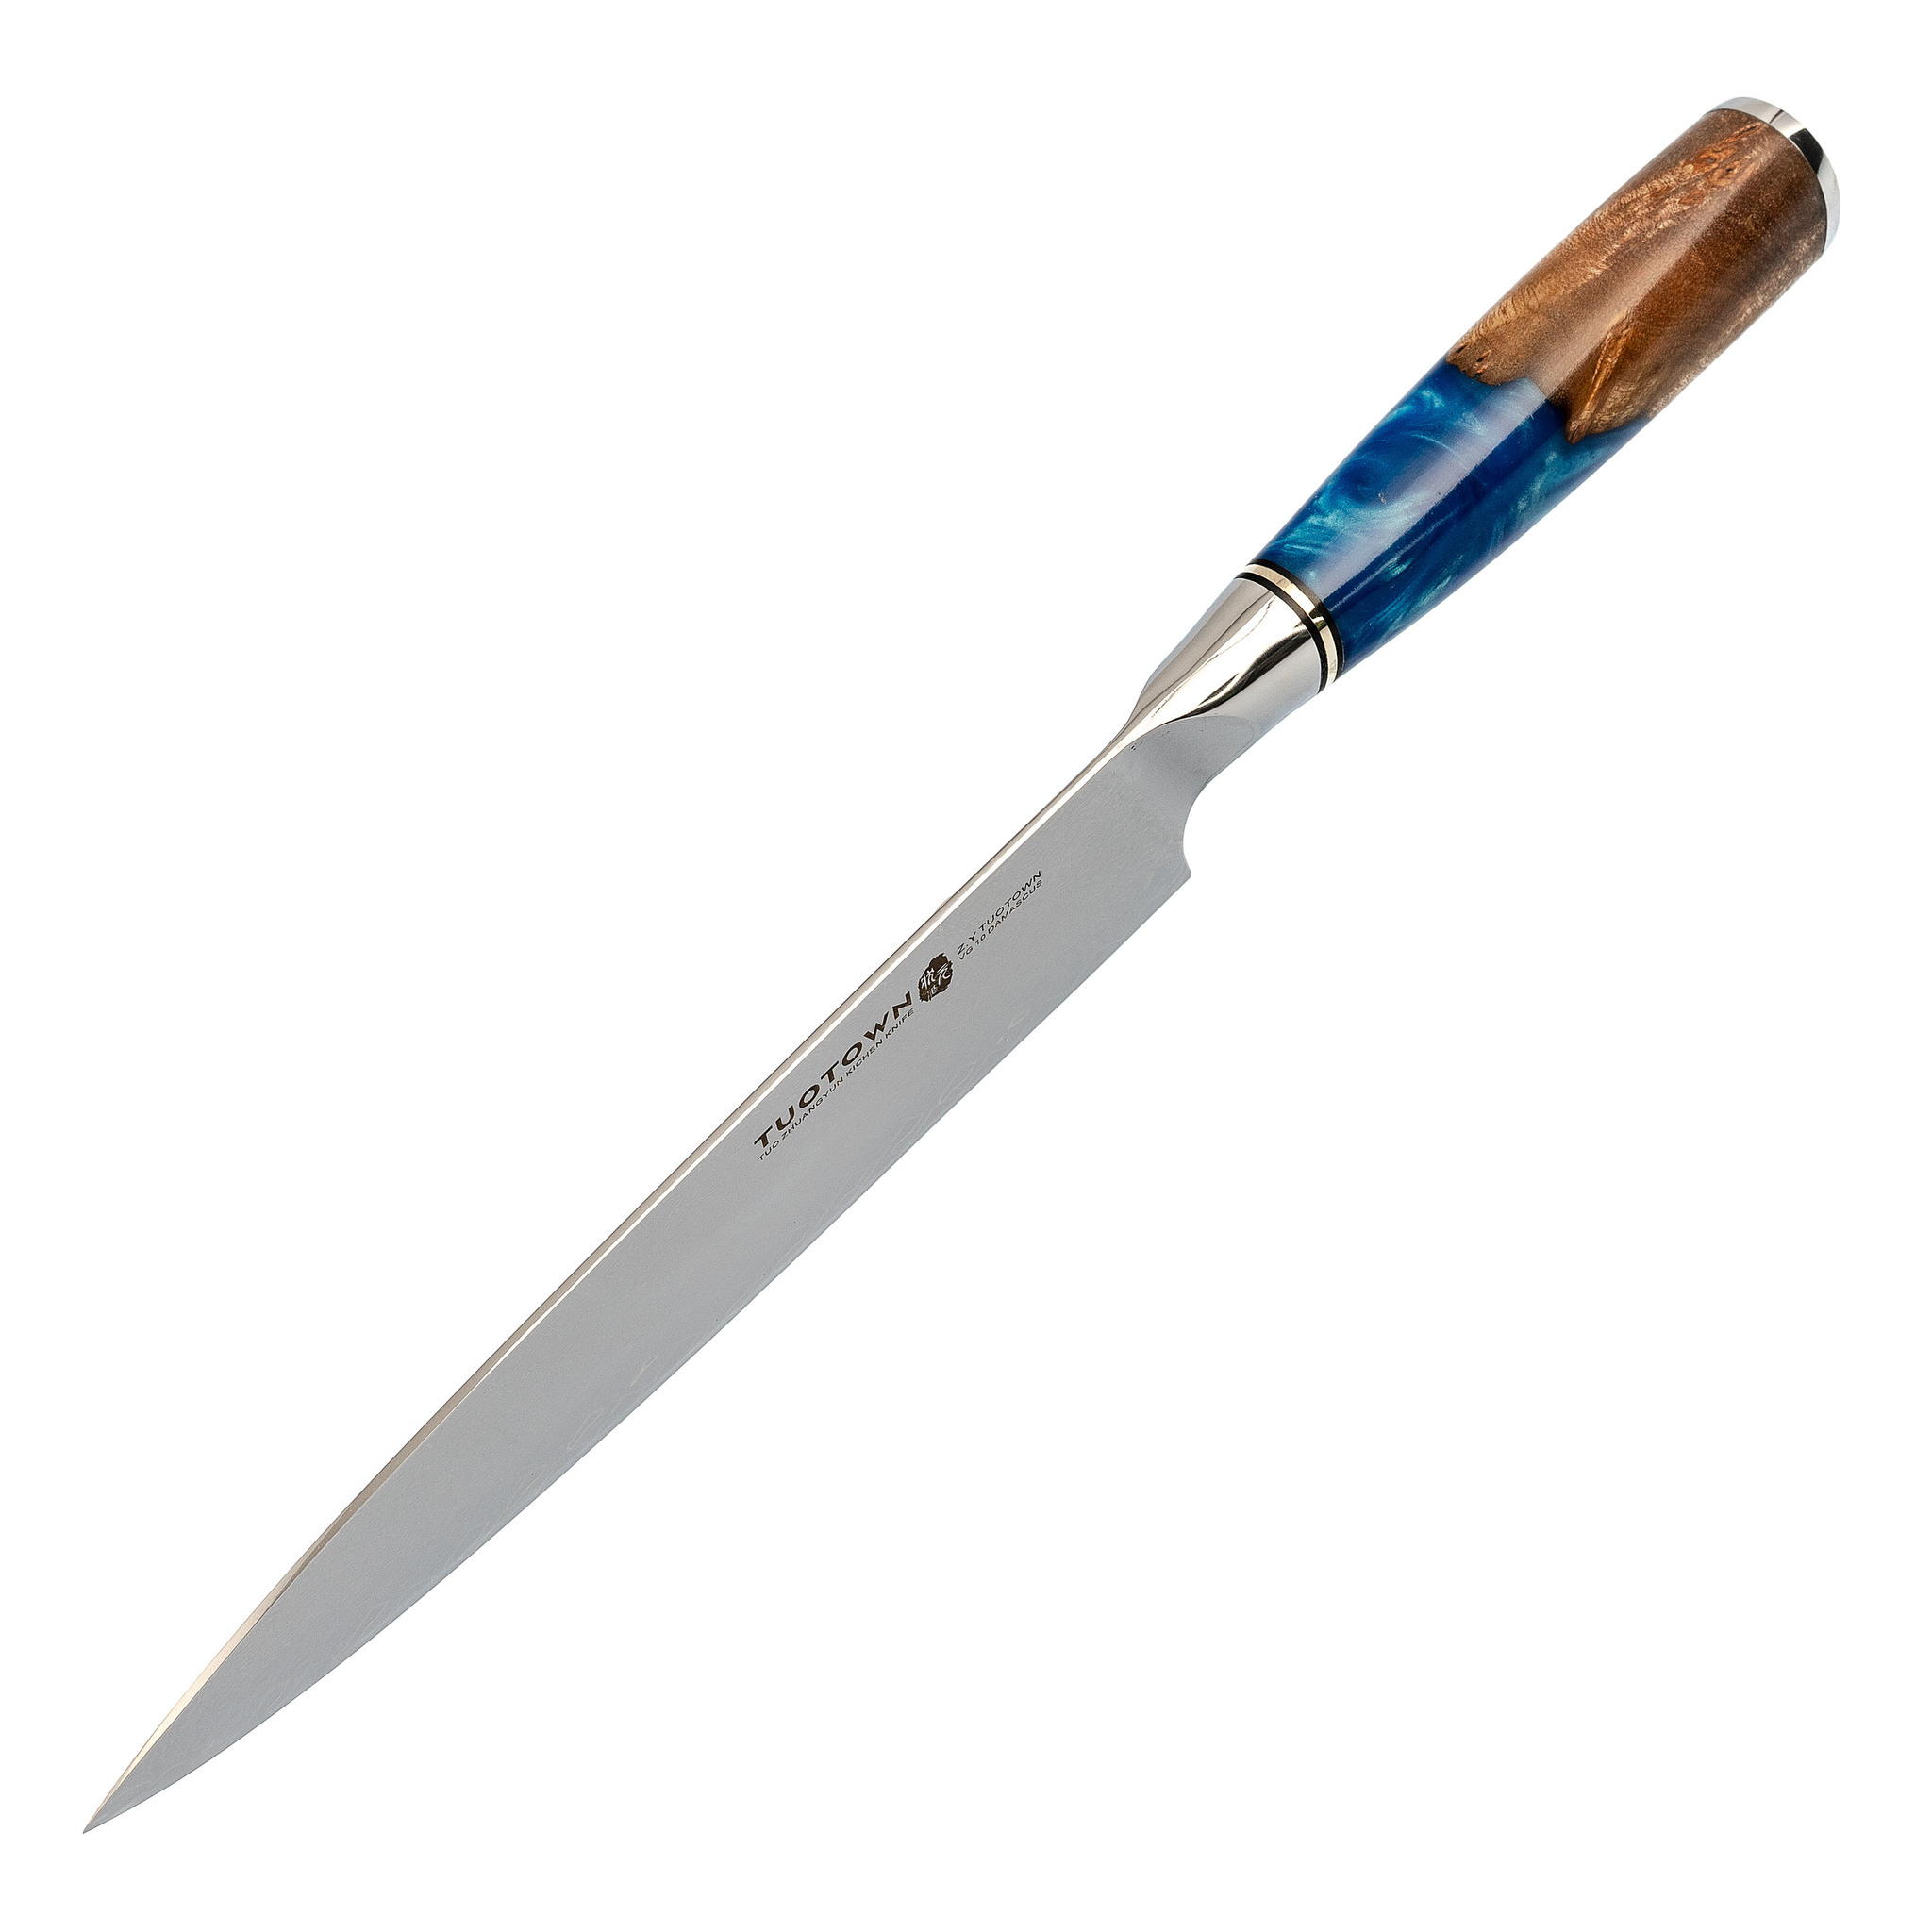 Кухонный шеф нож (Гуйто) Tuotown SG-001, сталь VG-10, рукоять дерево/эпоксидка - фото 6